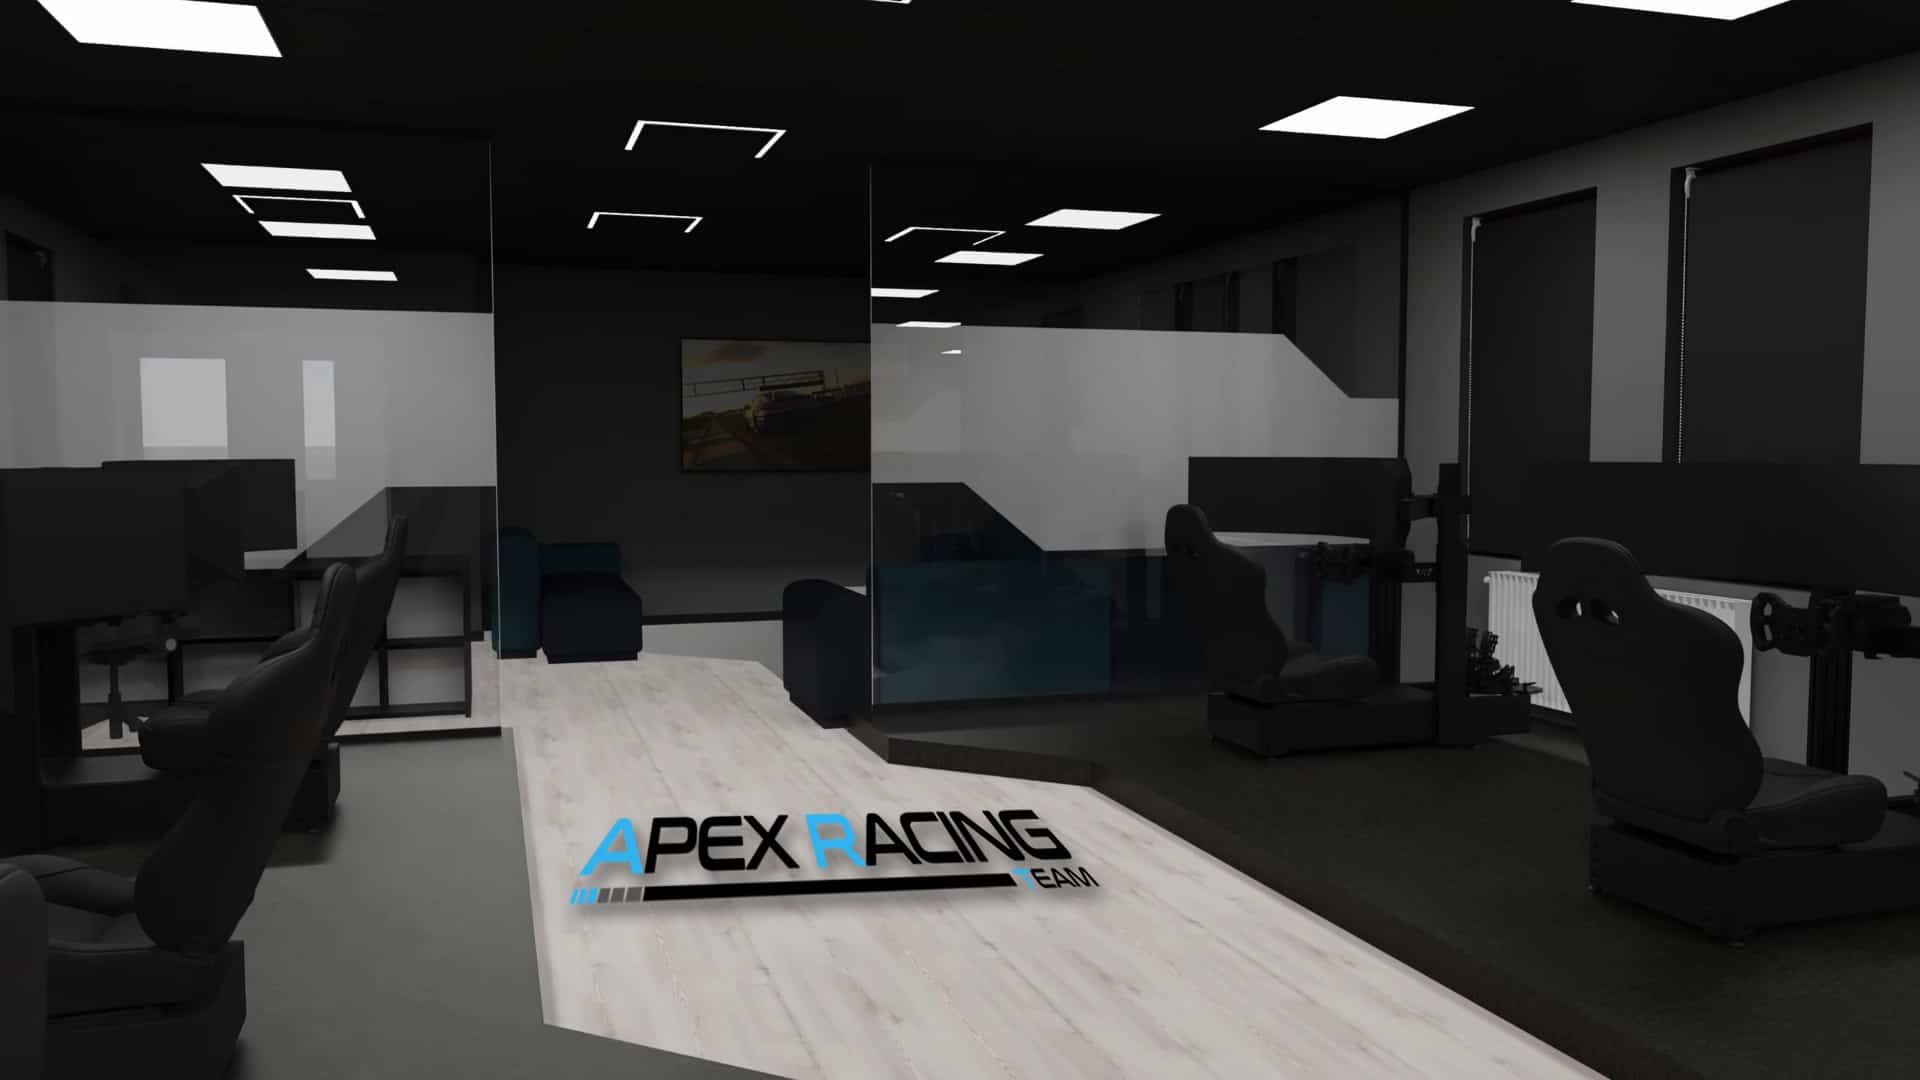 Apex Racing UK announces Apex Racing Sim Centre